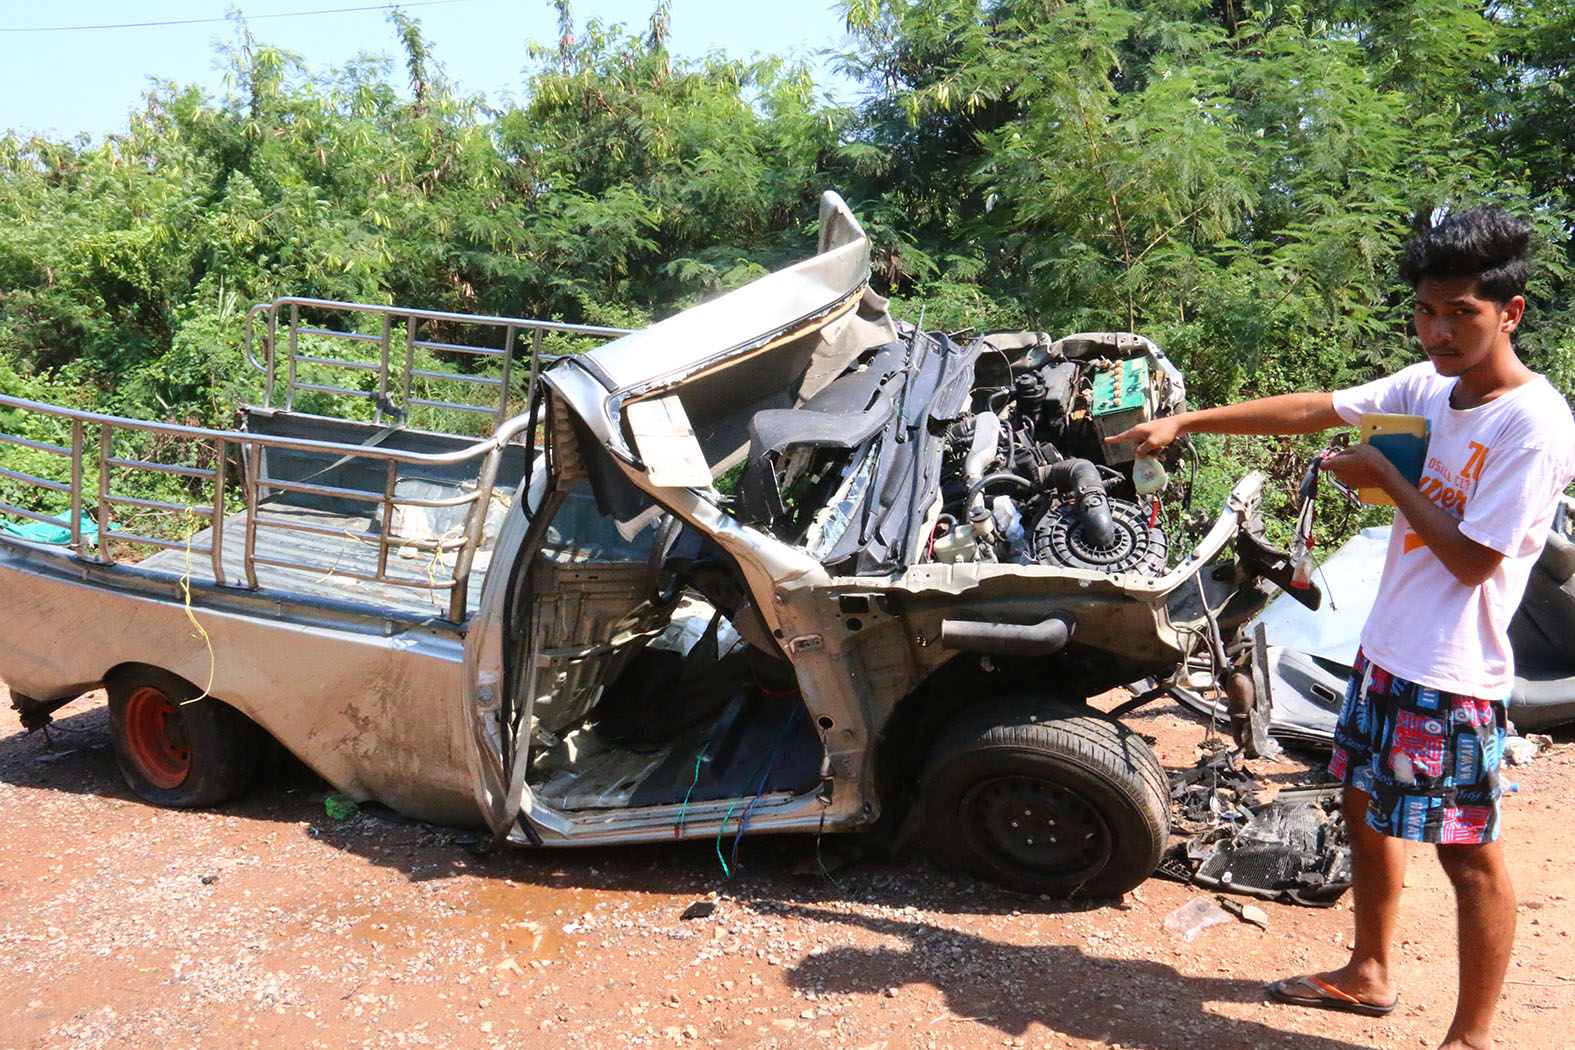 Sarawut Khamsamran says that a Buddhist amulet saved him from injury when his truck crashed.